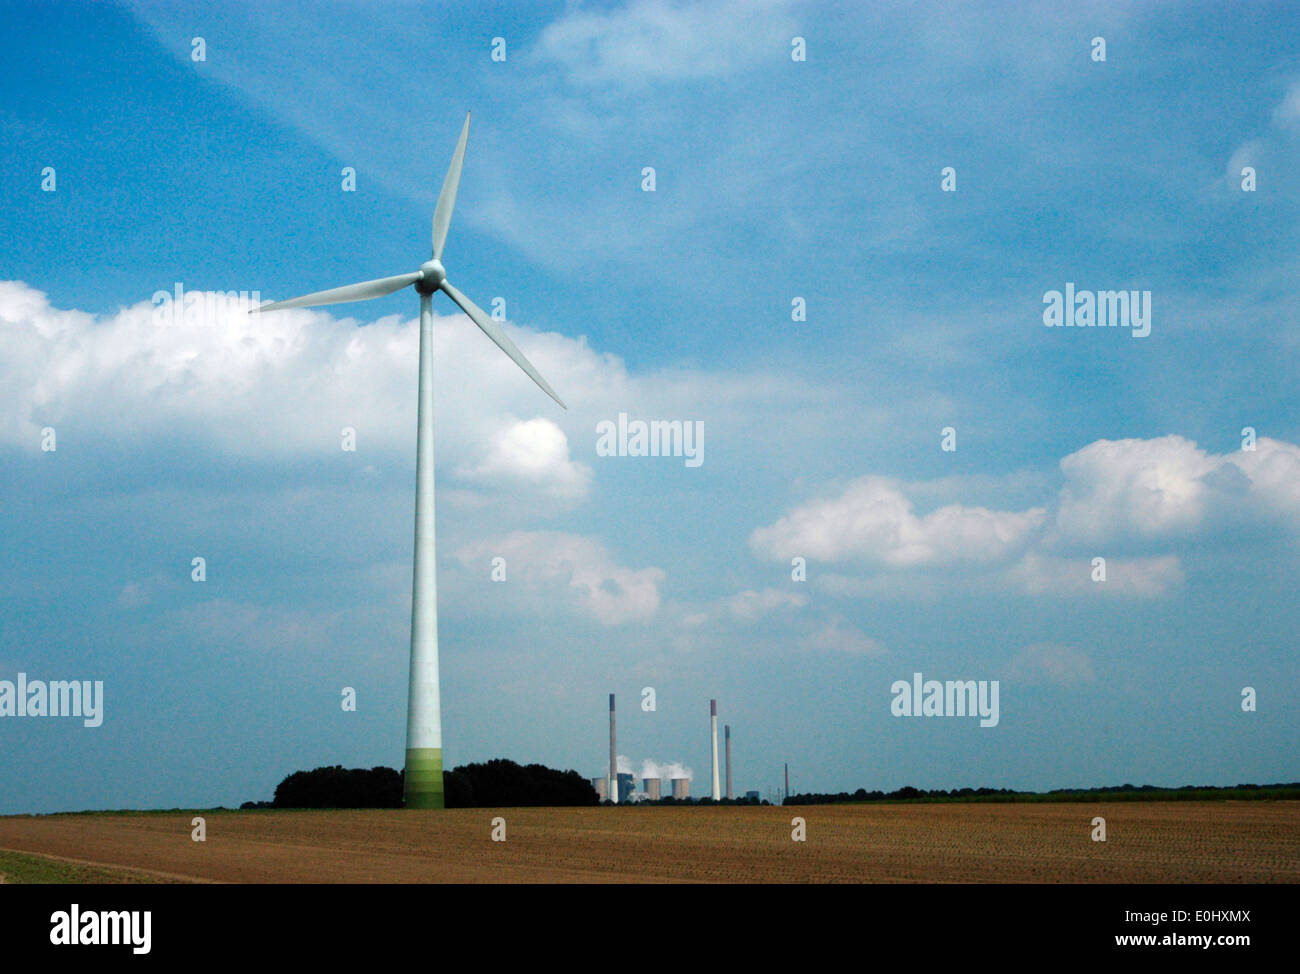 Deutschland, nahe Köln, Windenergie, Windturbine Foto Stock